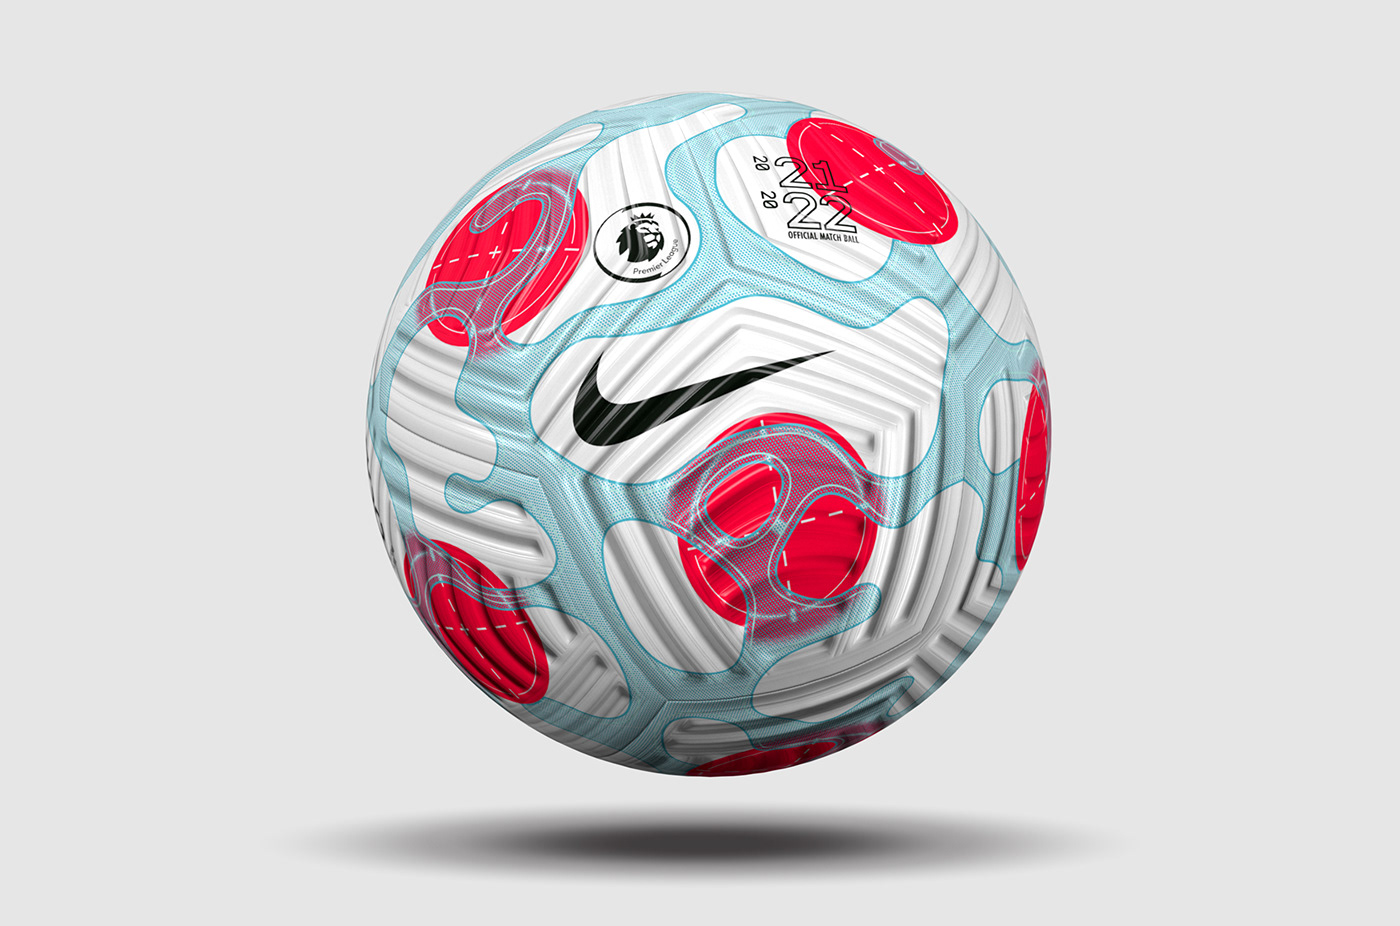 ball design flight football graphic Nike Premier League soccer frosted soccer ball